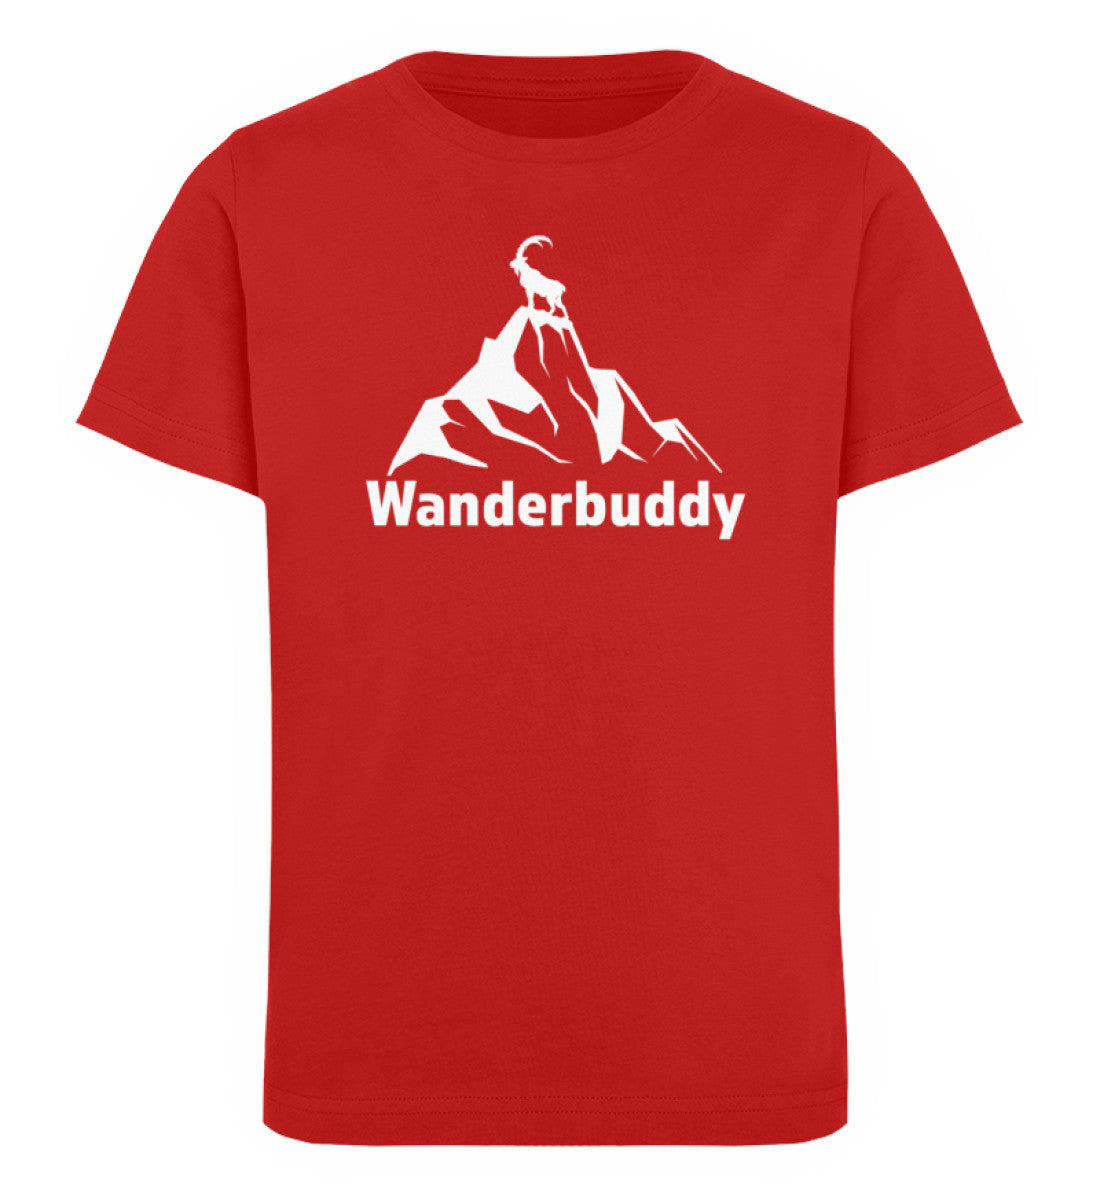 Wanderbuddy - Kinder Premium Organic T-Shirt Rot